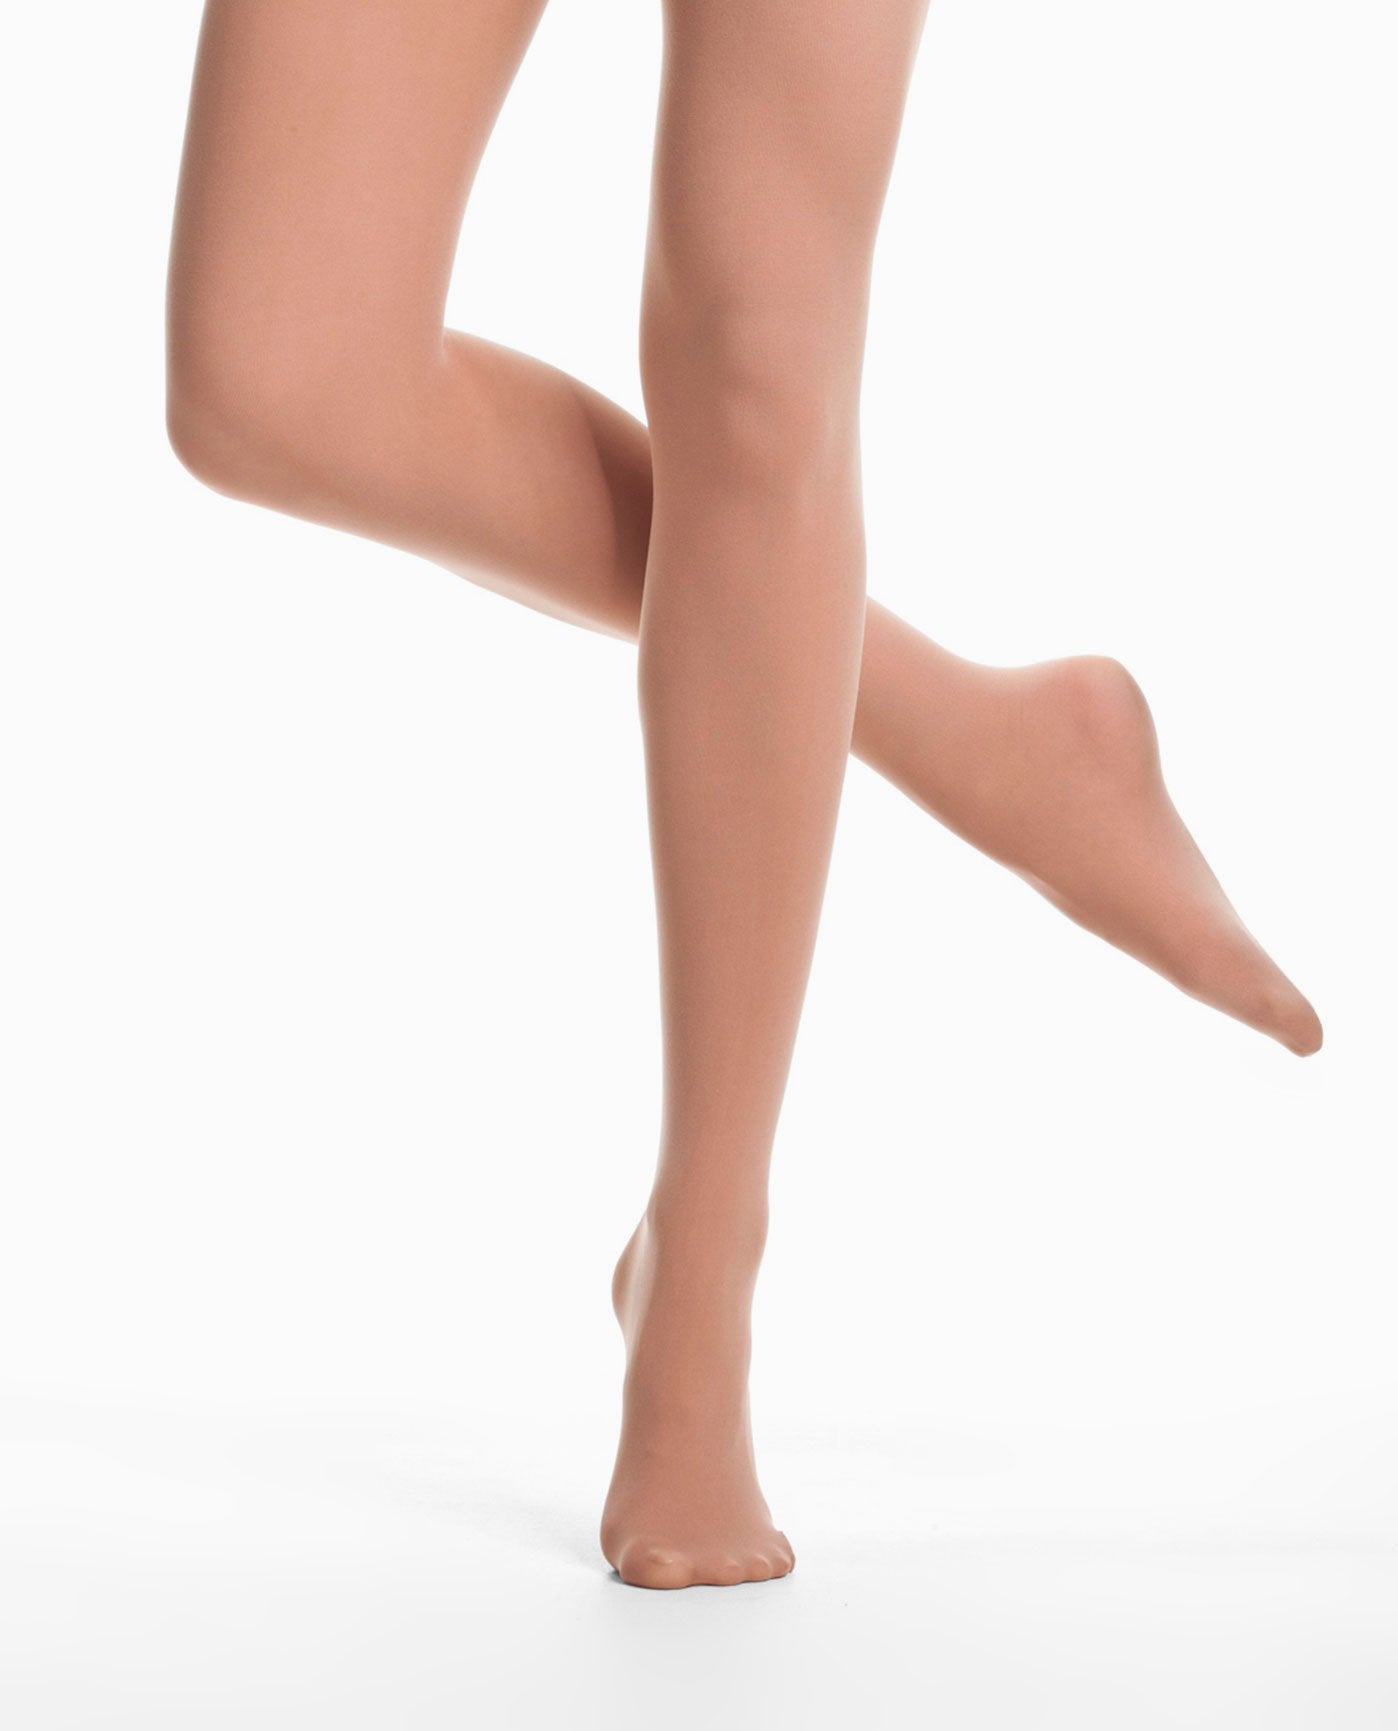 2 Pair Ladies Black Winter Tights Stockings Footed Dance Pantyhose One —  AllTopBargains